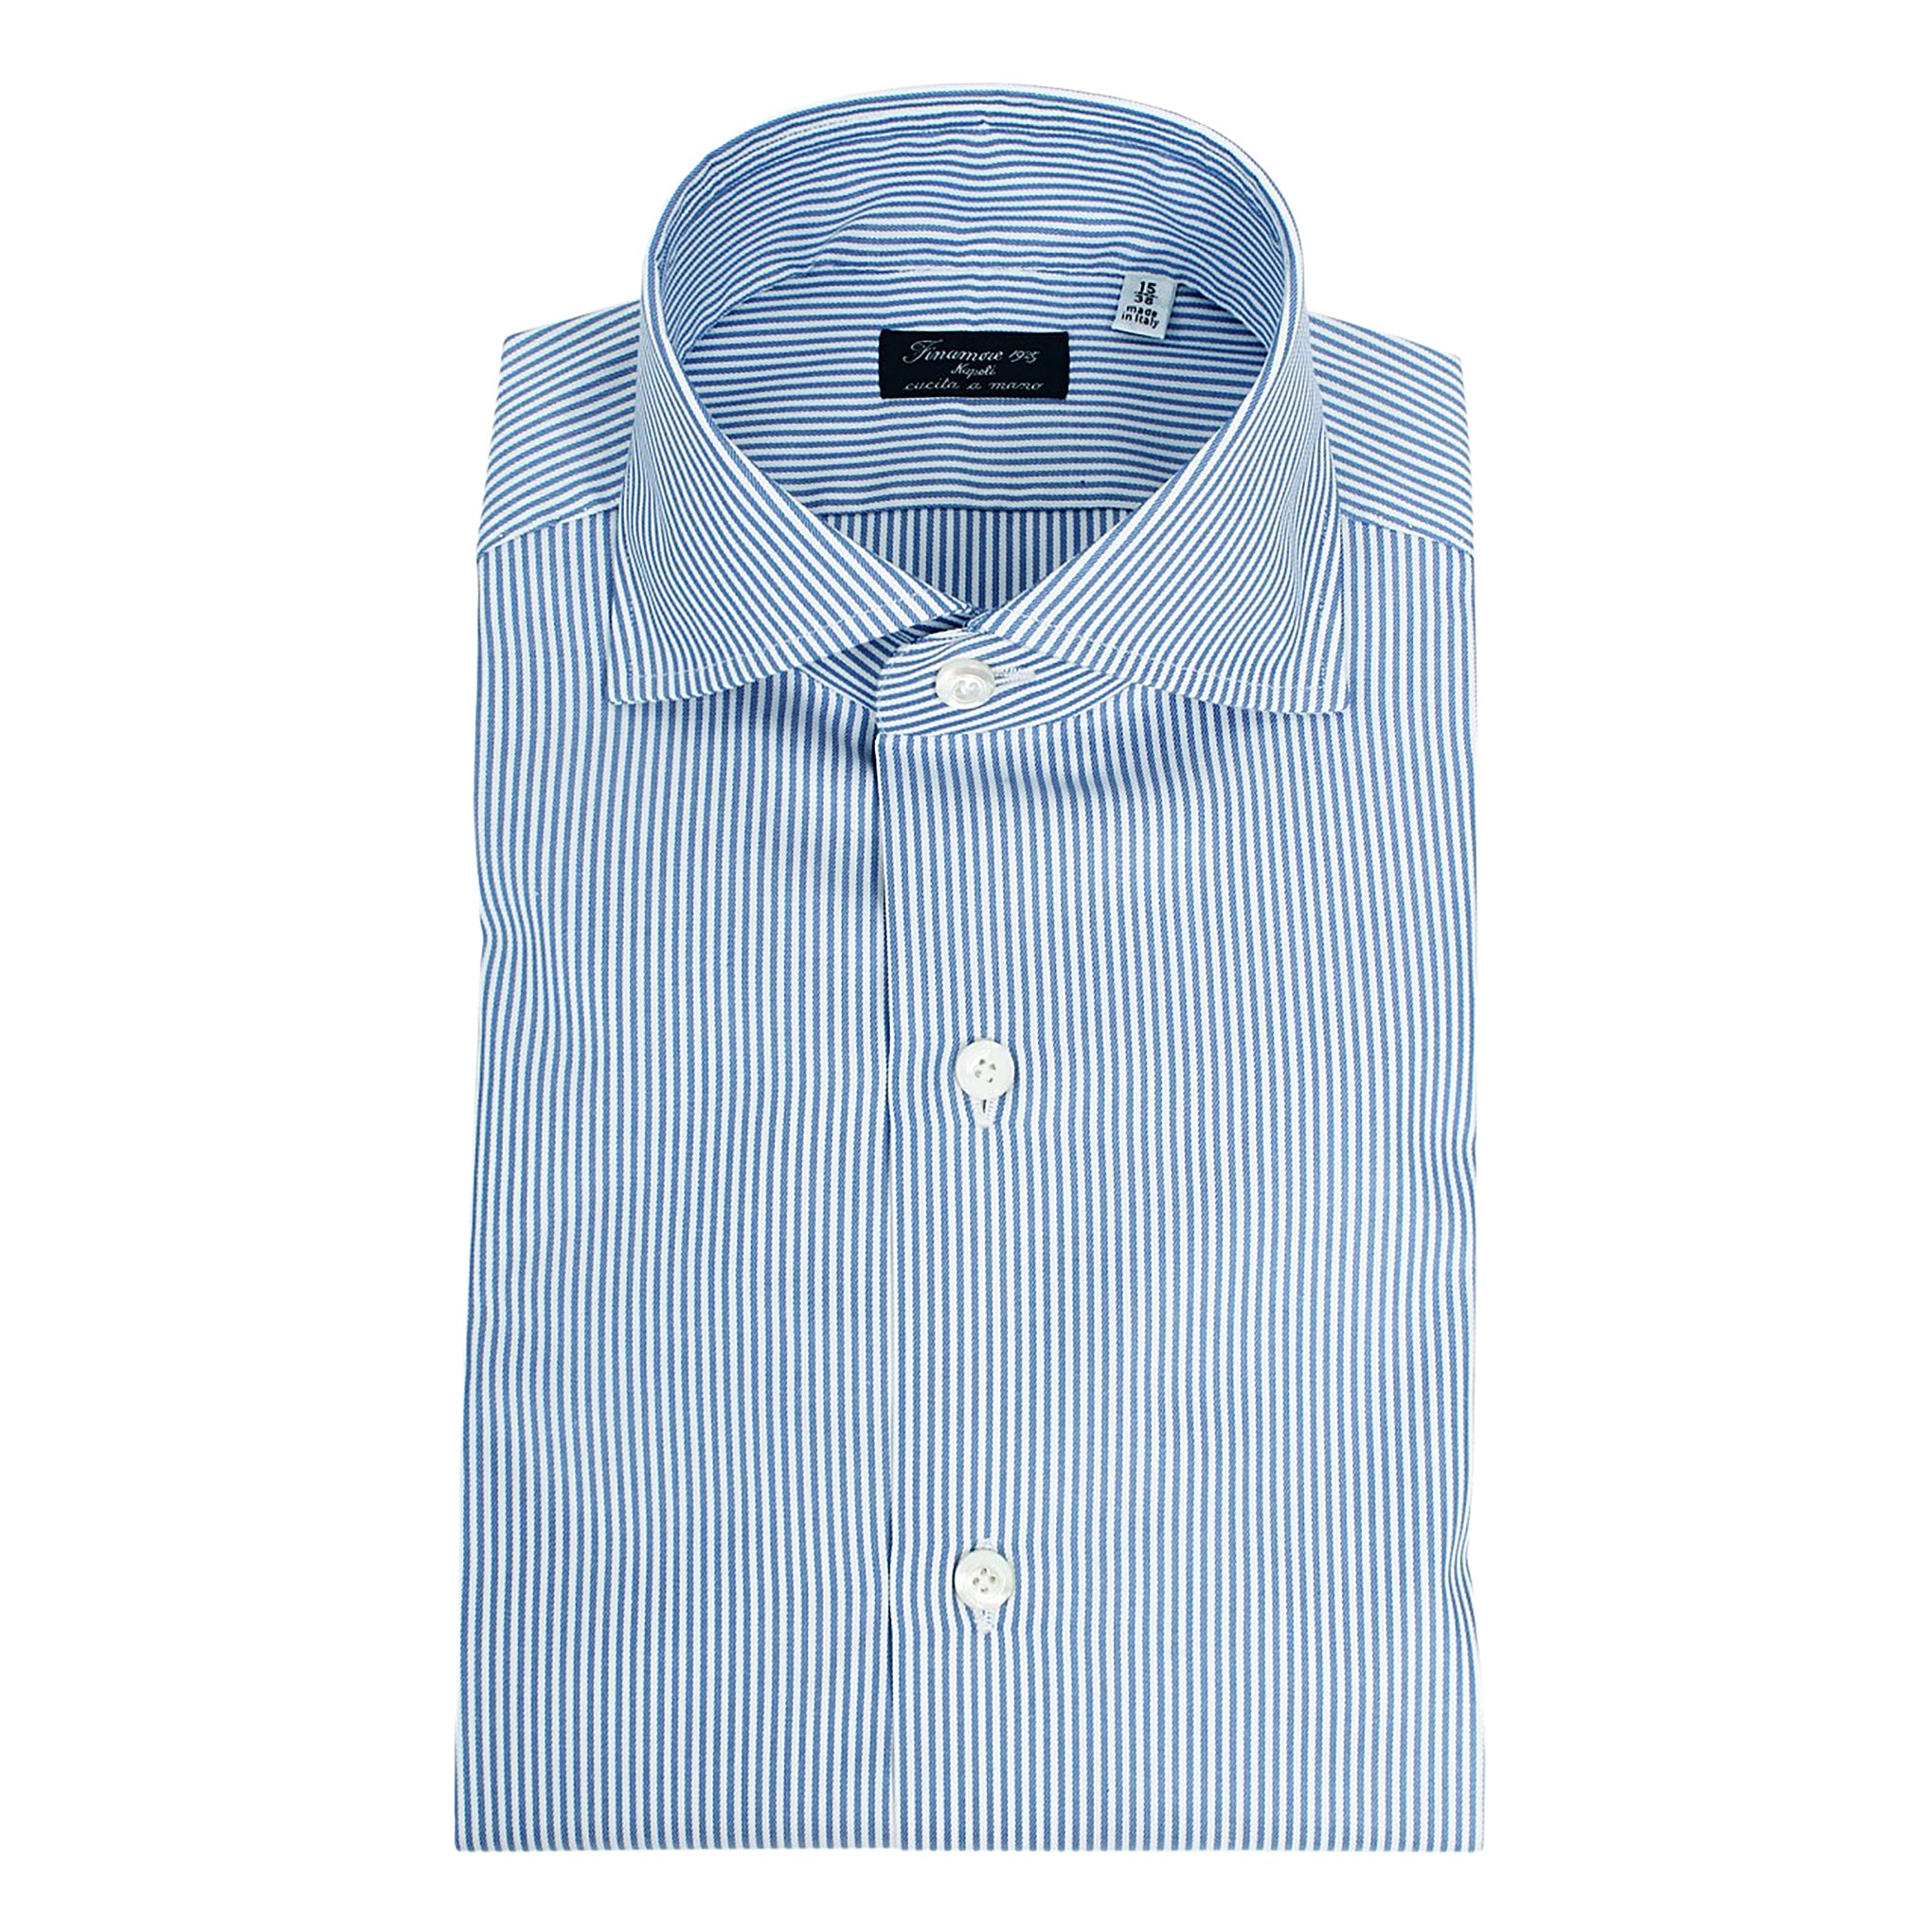 Classic shirt cotton light blue stripe twill Napoli Finamore 1925